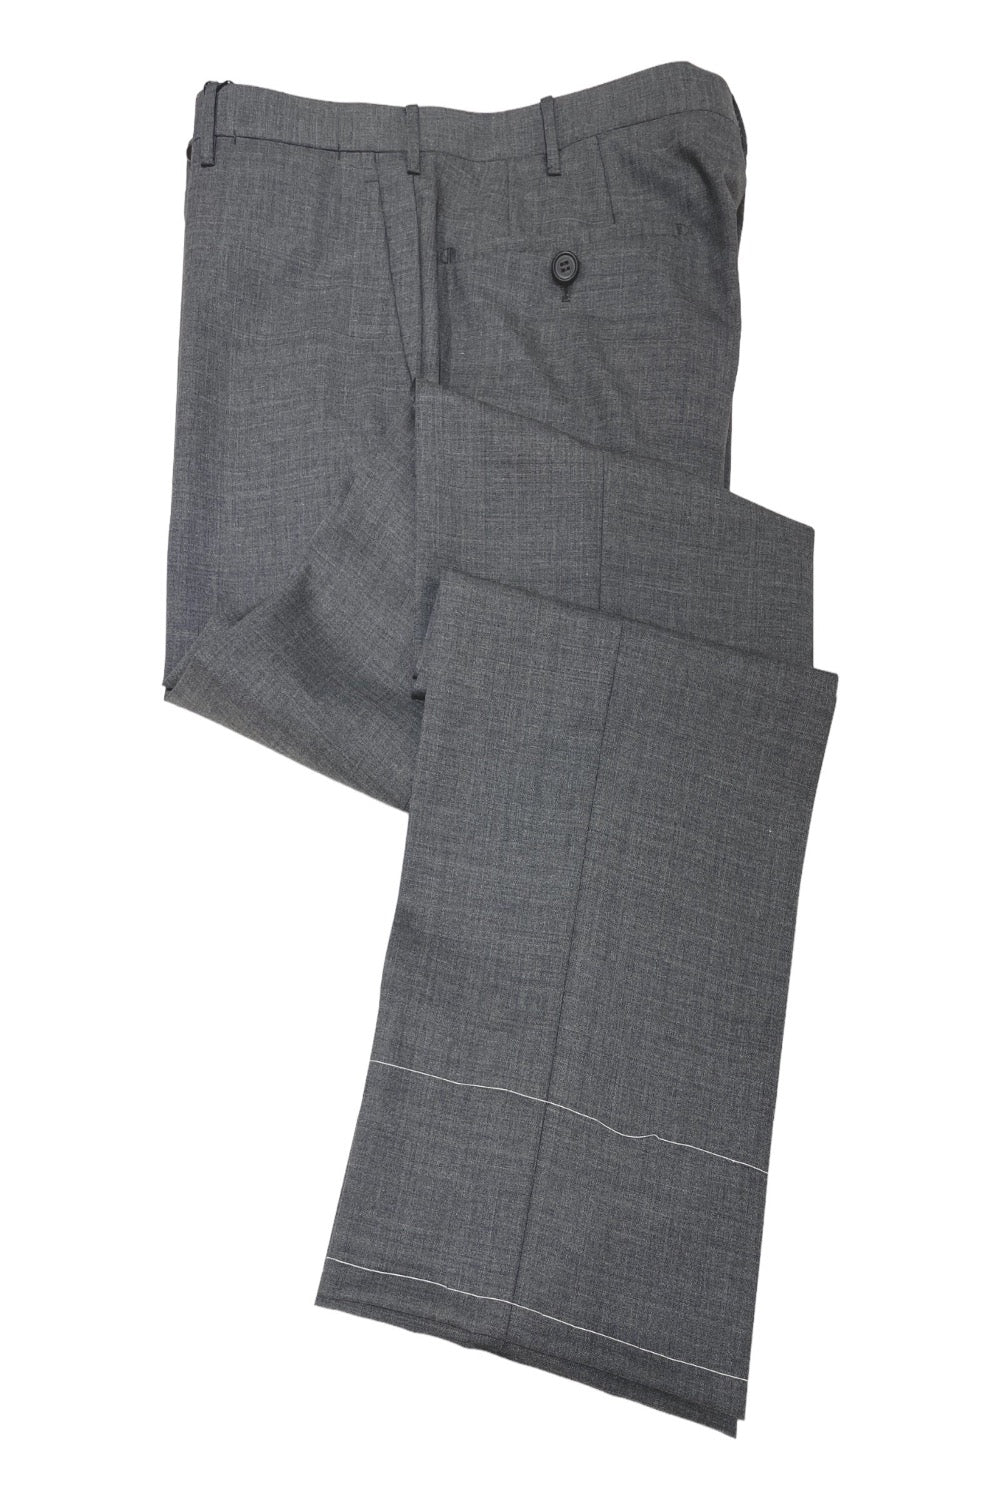 All-Year-Round Sartorial Dress Pants - Mid Grey DRESS PANTS48